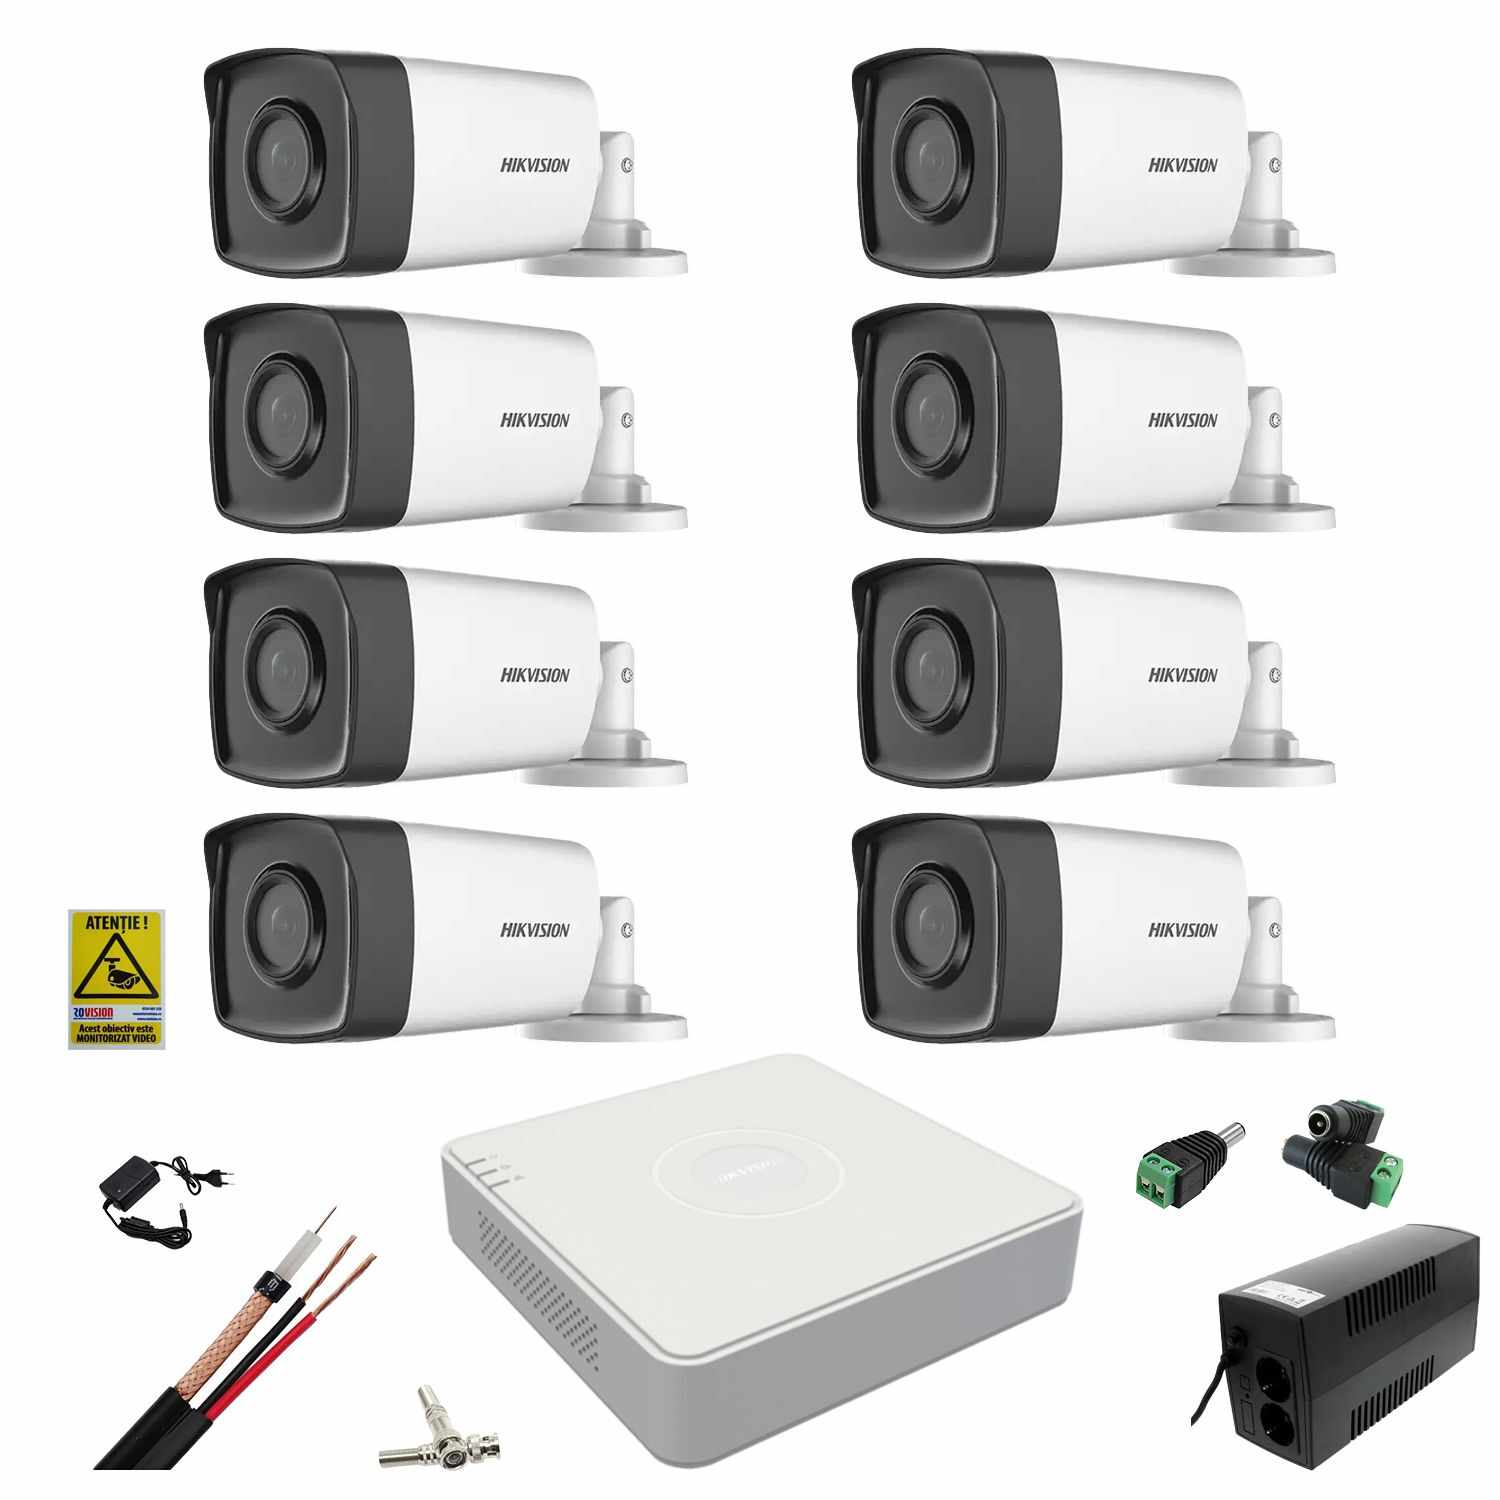 Sistem supraveghere video Hikvision 8 camere 2MP 3.6mm IR 80m, DVR 8 canale 1080N, accesorii, UPS cu baterie 360W